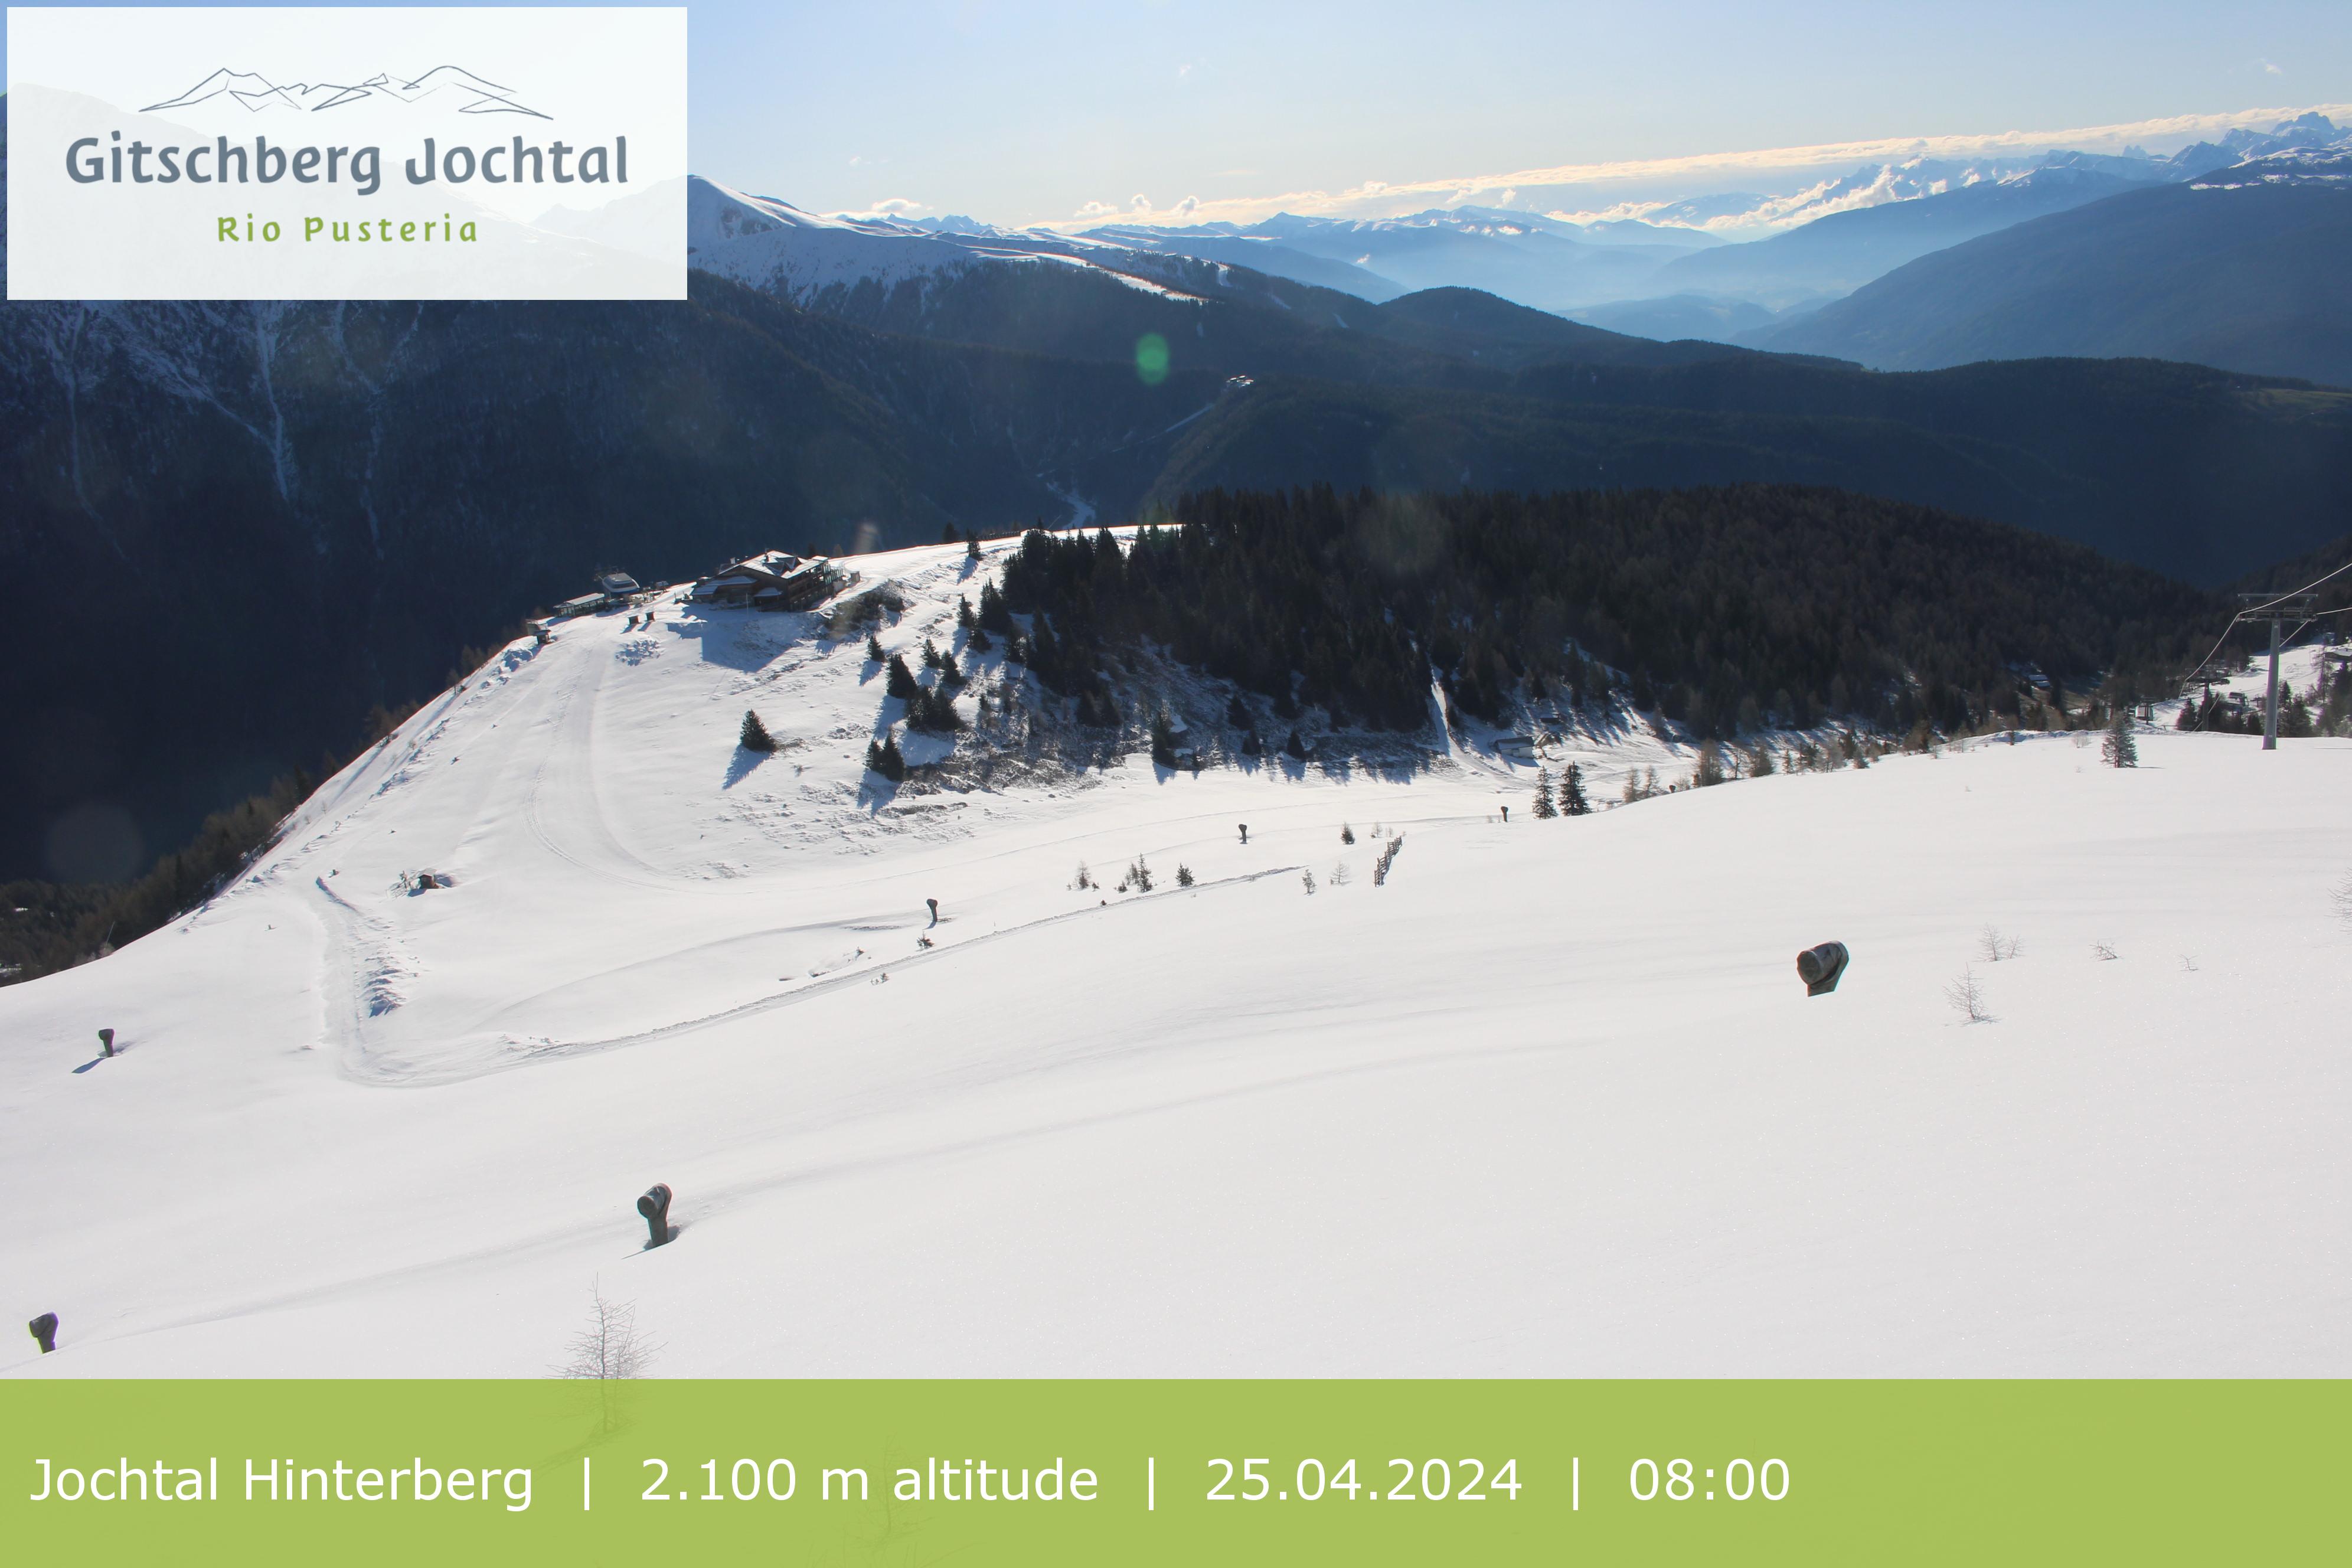 Webcam of the mountain station Gitschberg Jochtal